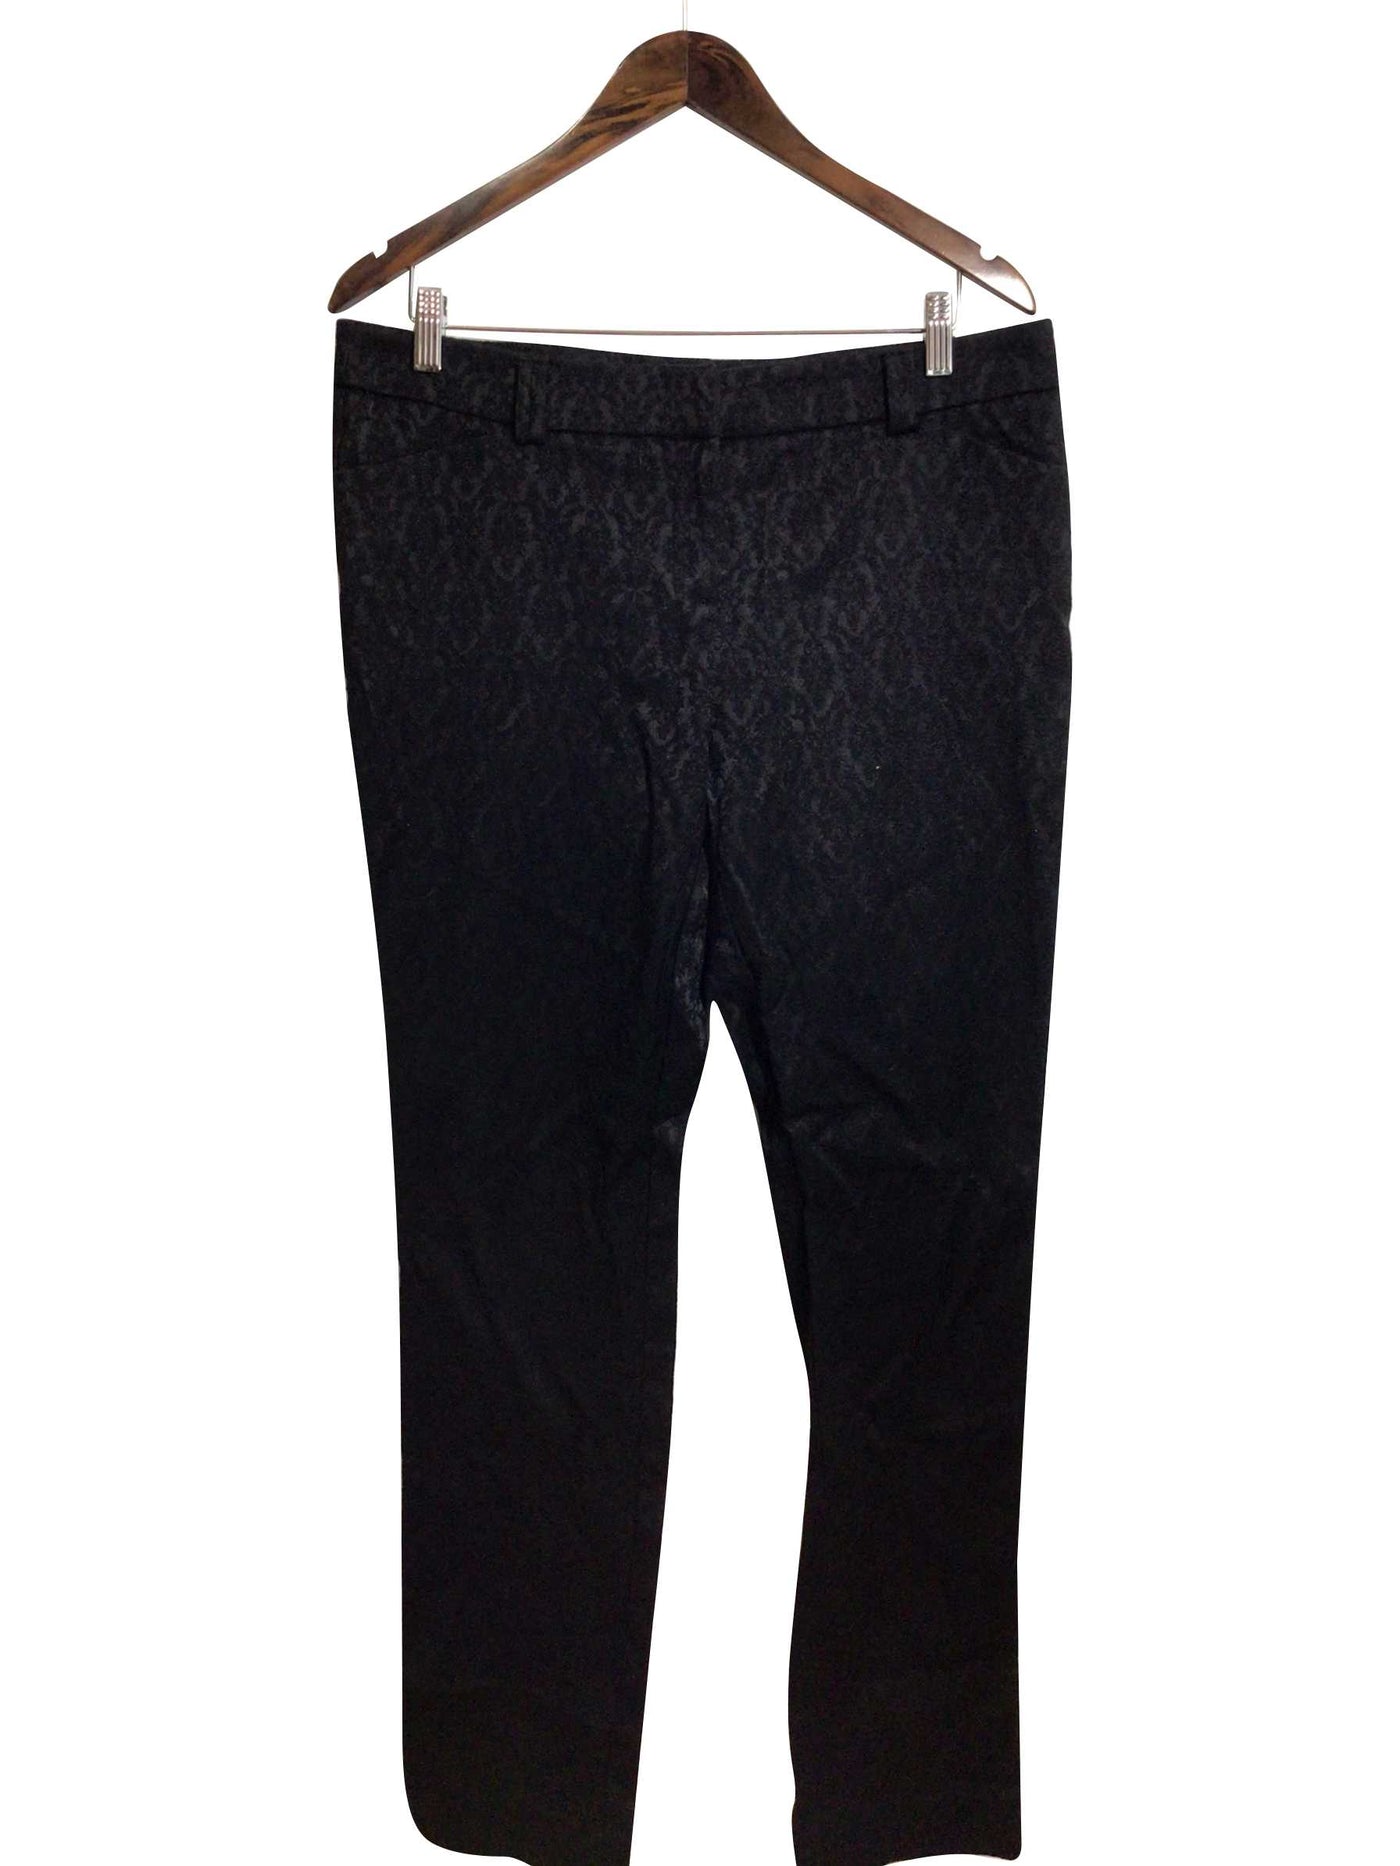 RICKI'S Regular fit Pant in Black - Size 14 | 19.9 $ KOOP